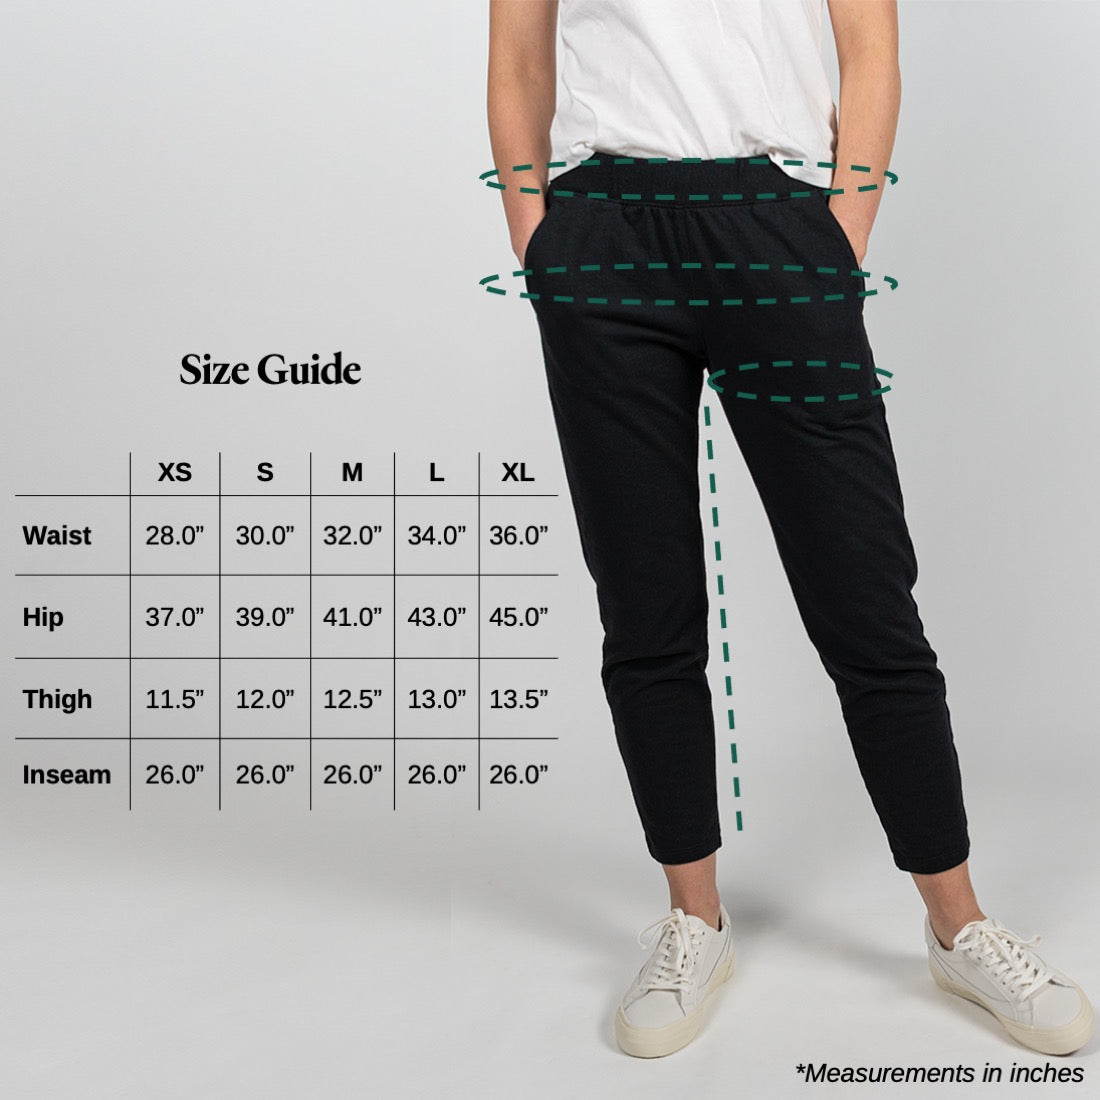 Your Pareto Starter Kit - Your Sweatpants ($108)